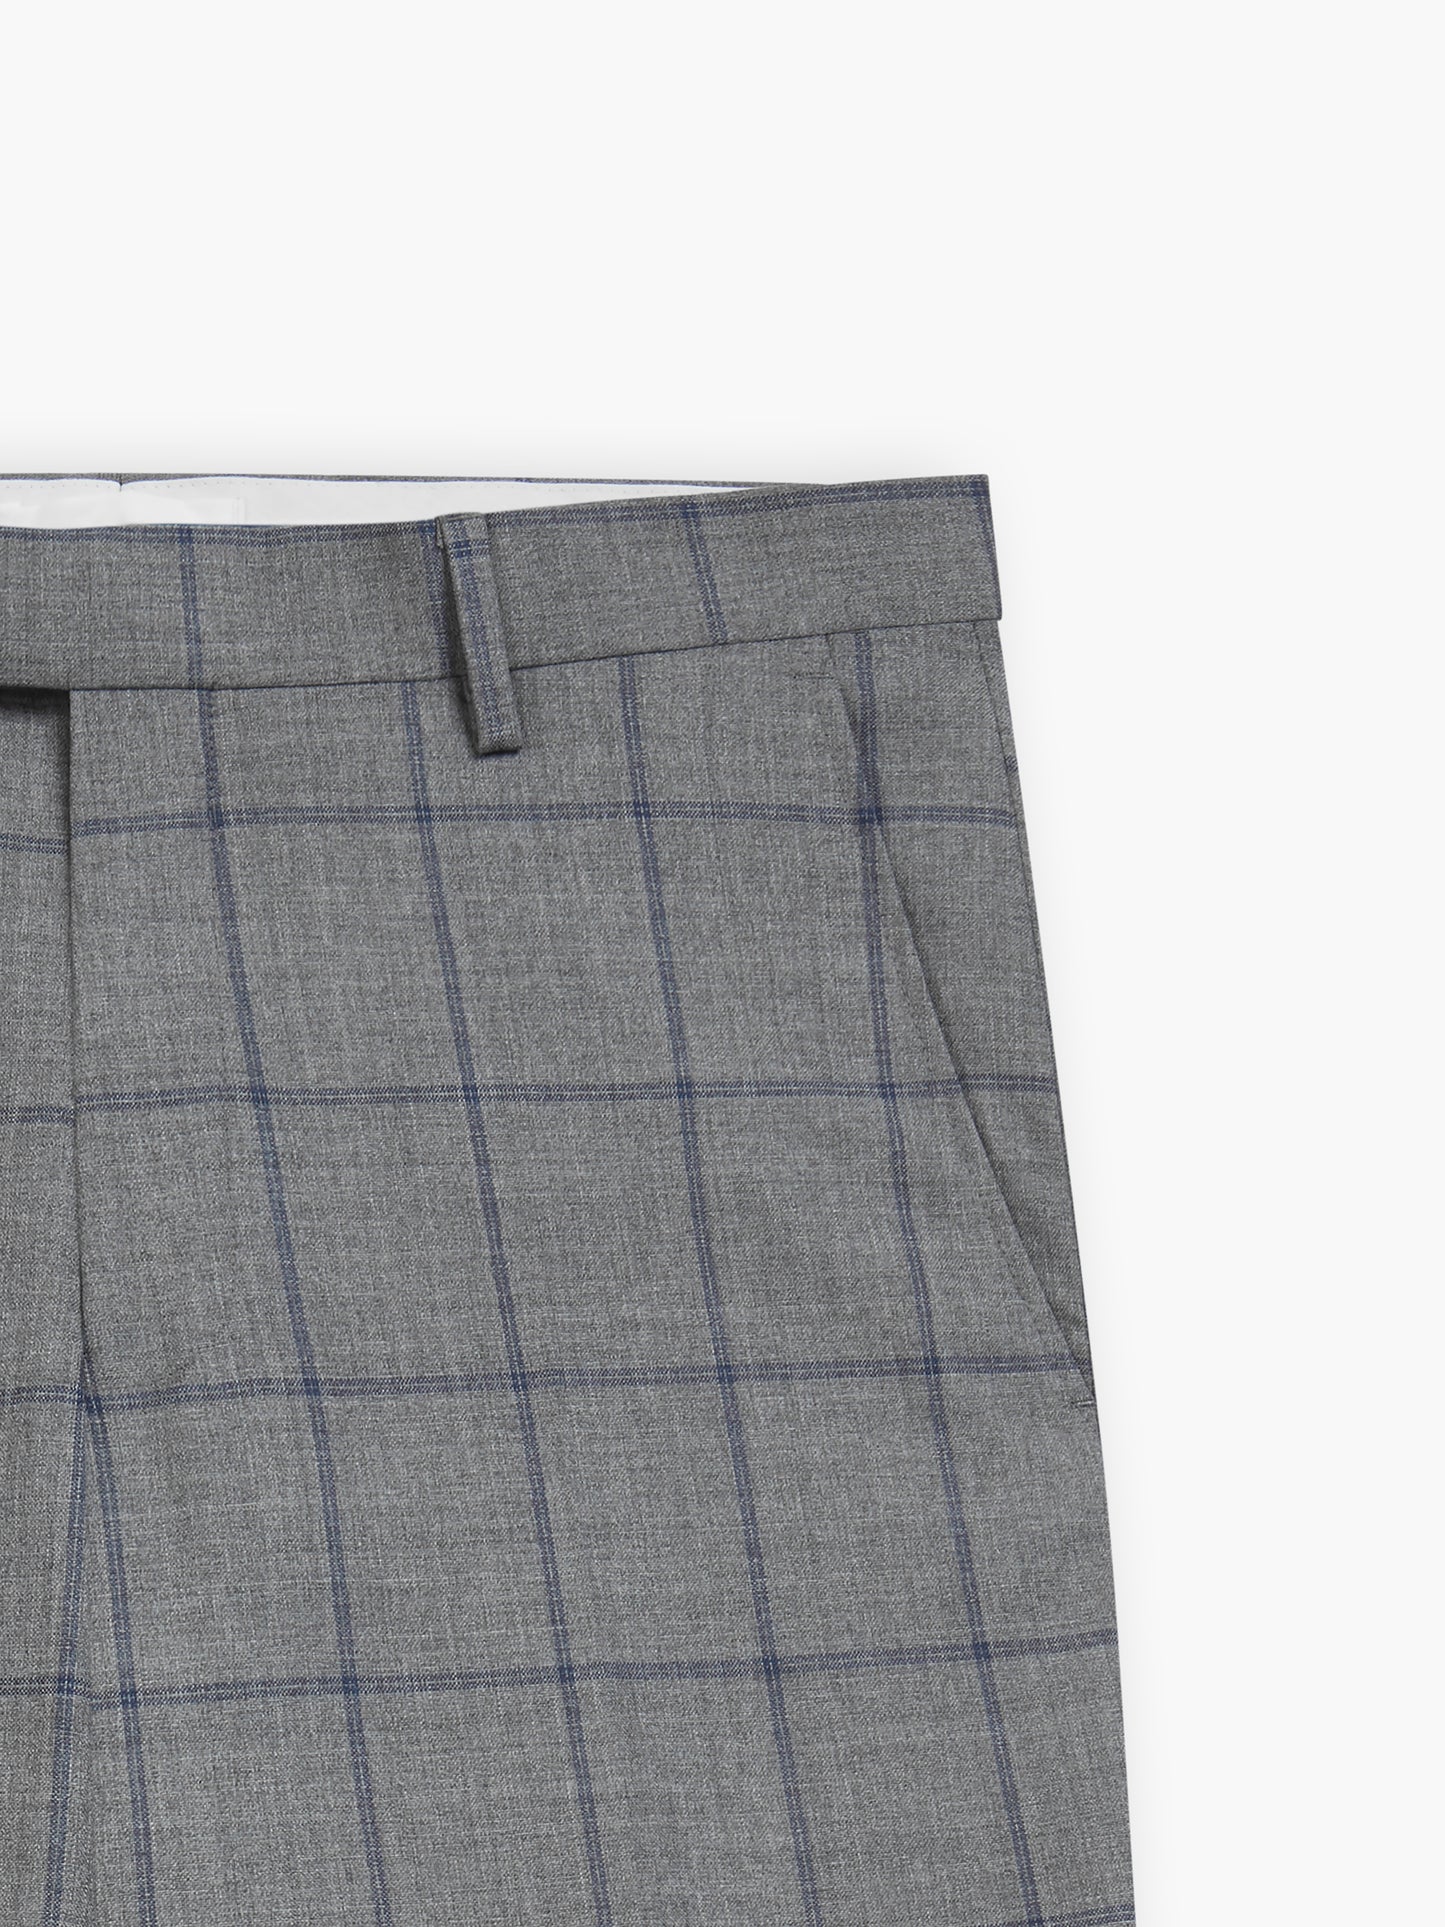 Niro Barberis Slim Fit Grey and Blue Windowpane Check Trouser